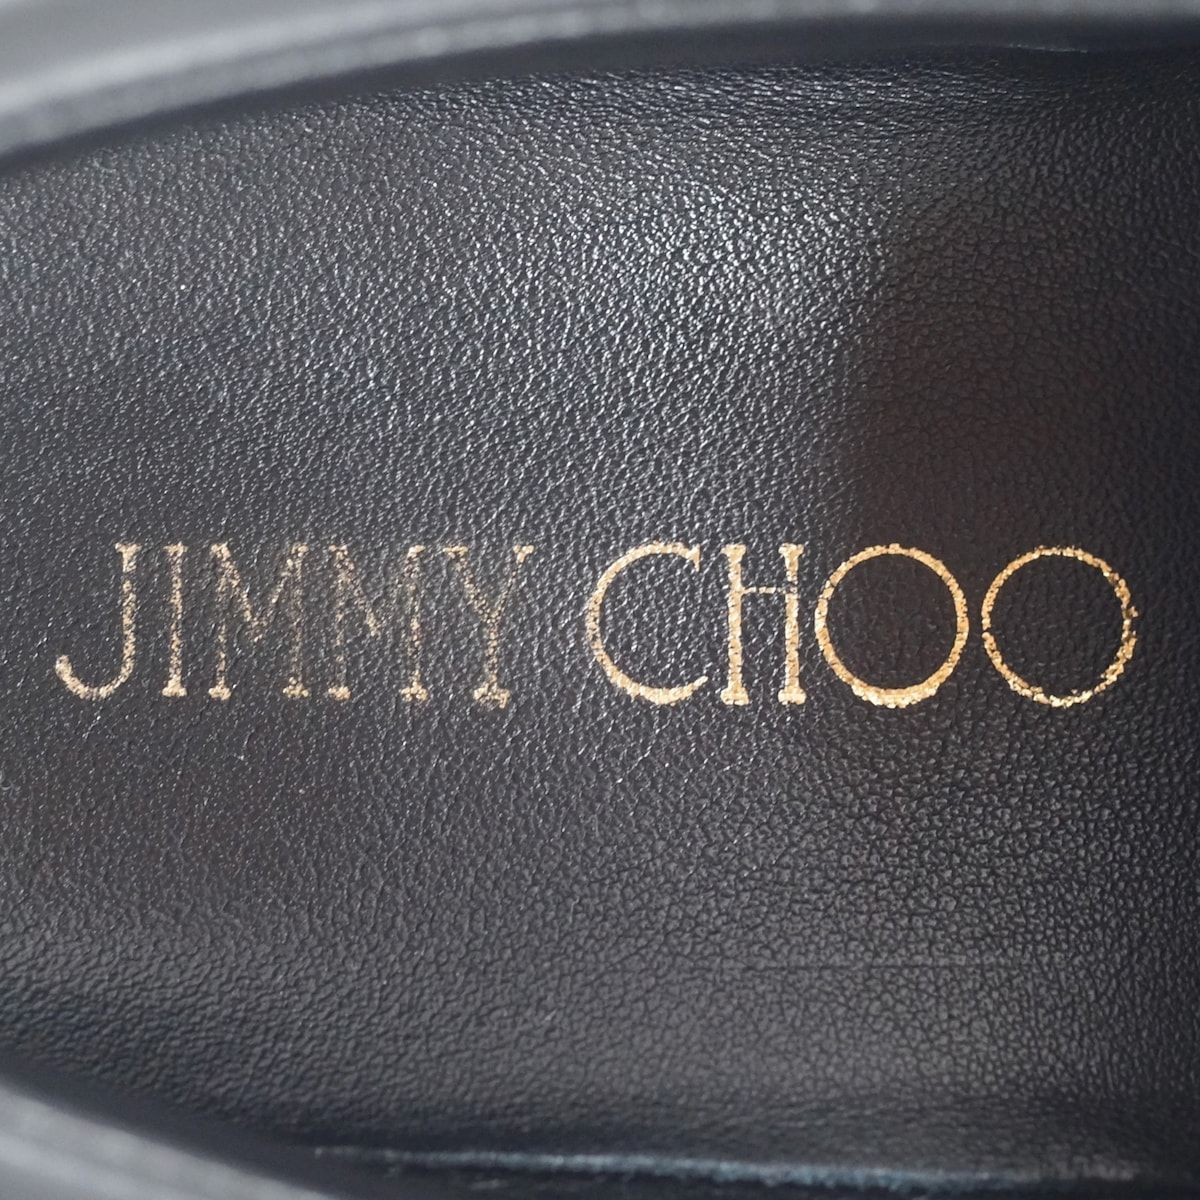 JIMMY CHOO(ジミーチュウ) スリッポン 38 メンズ - 黒 スタッズ/スター ...